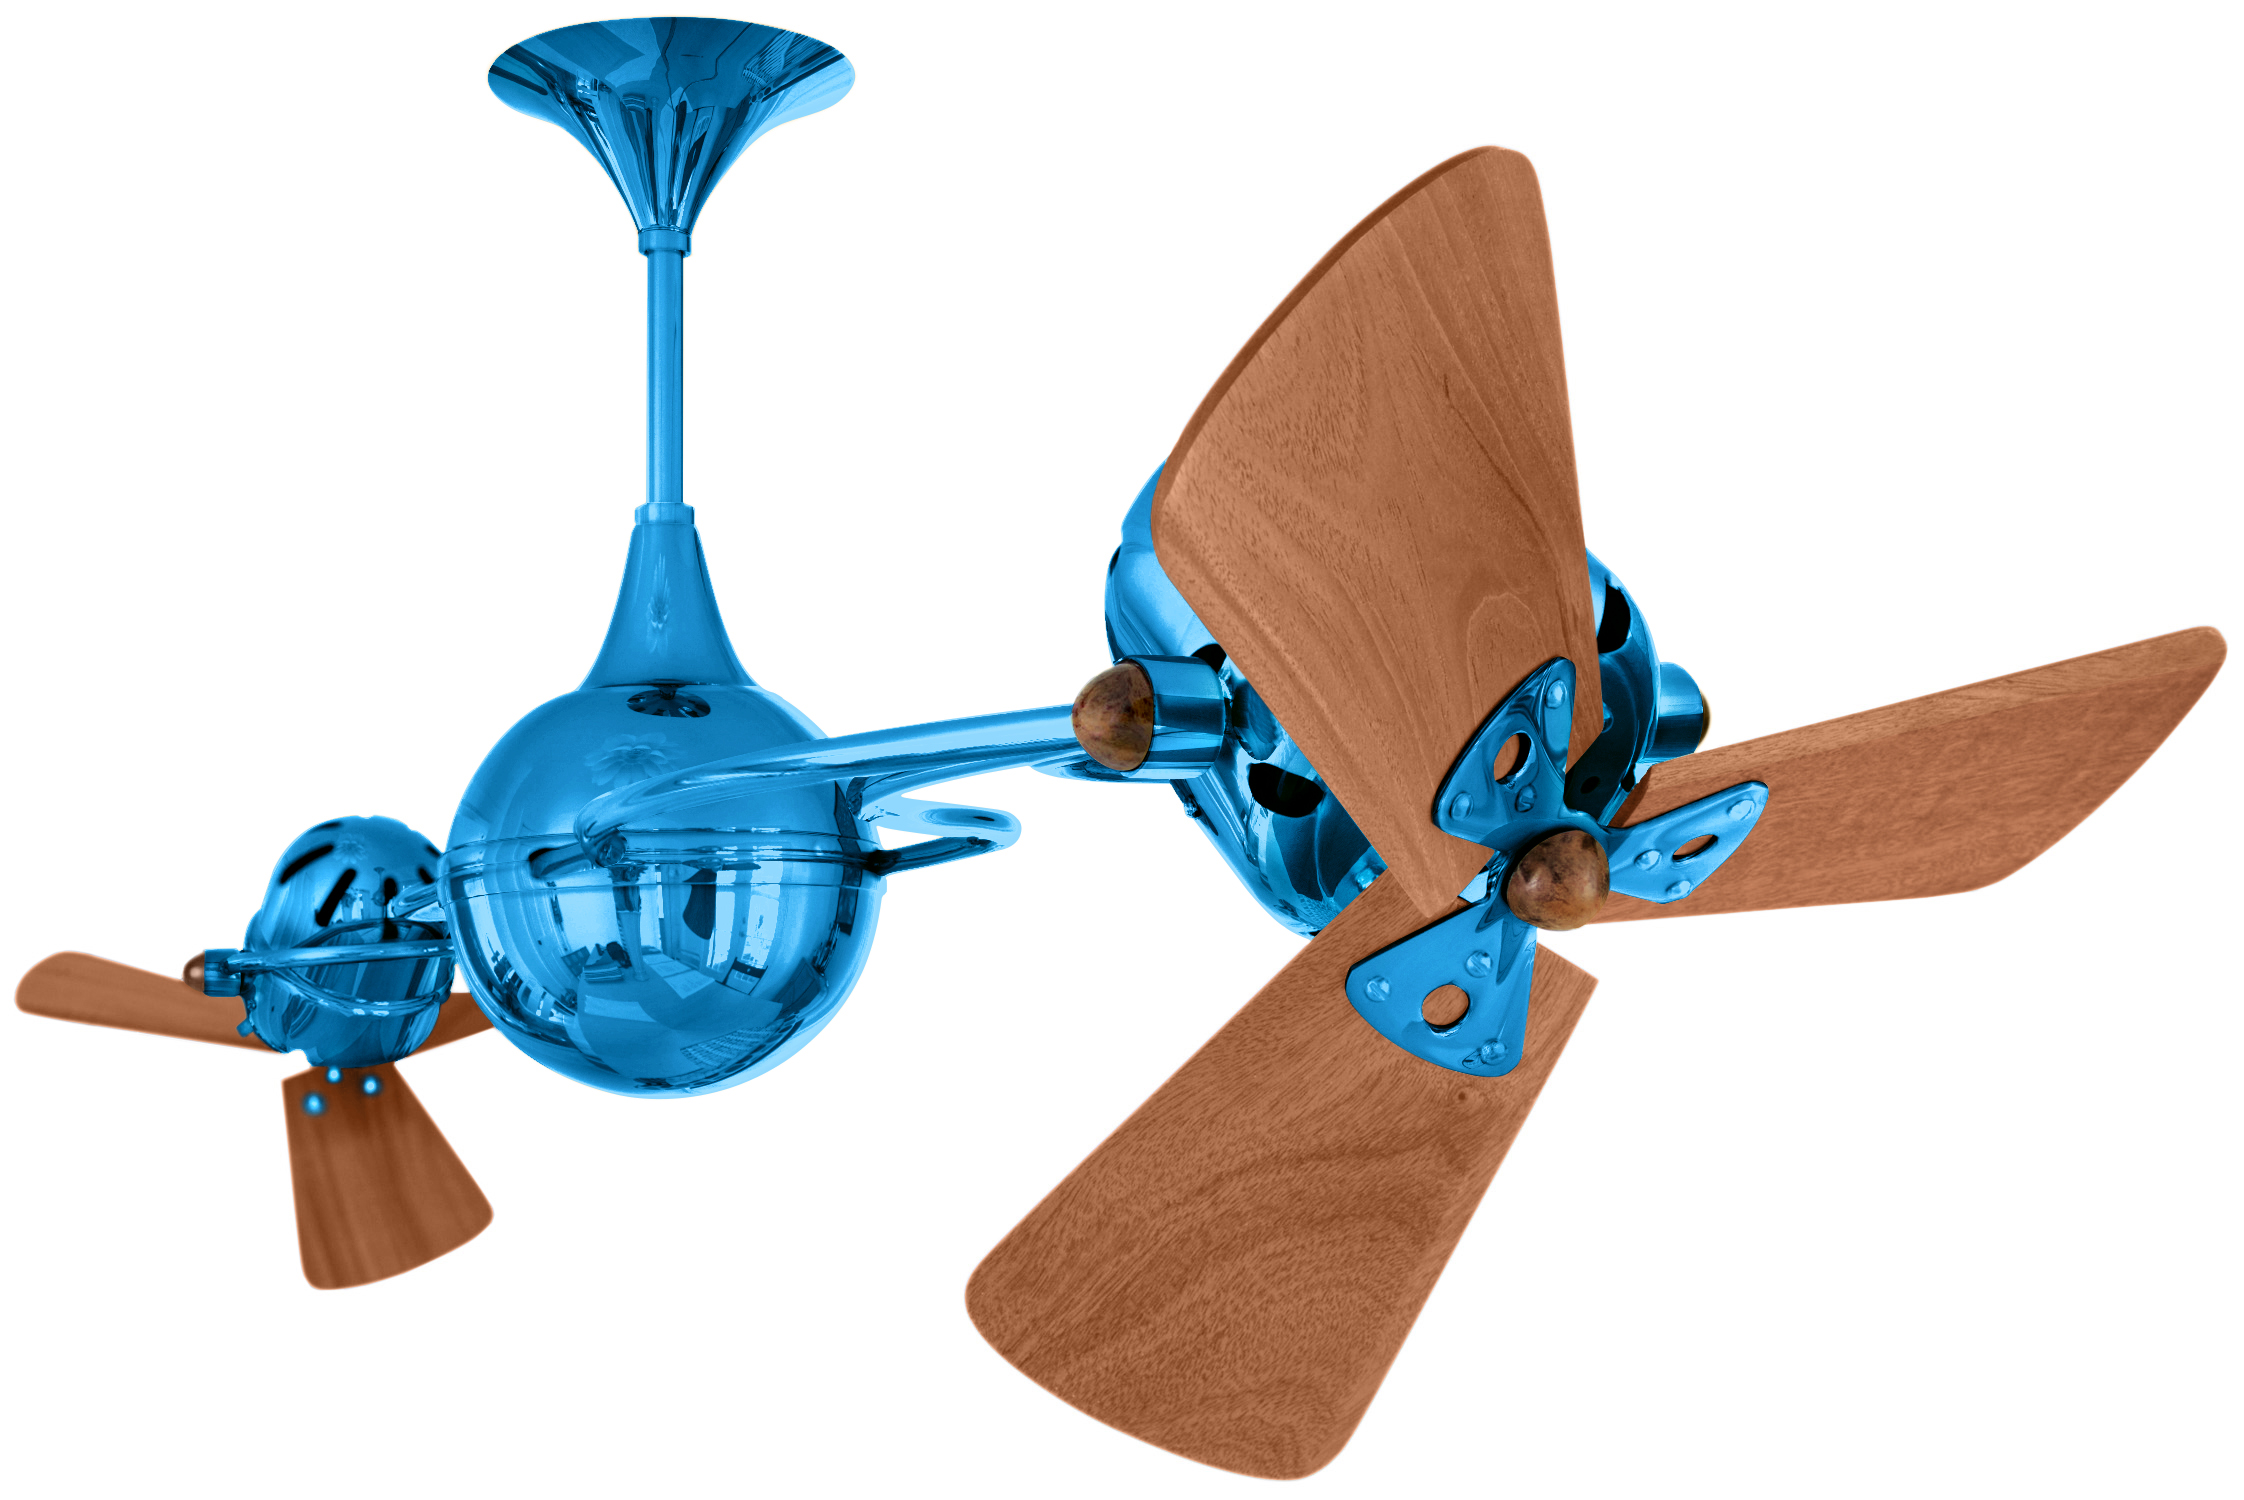 Italo Ventania rotational dual head ceiling fan in Light Blue / Agua Miranha finish with solid mahogany wood blades made by Matthews Fan Company.